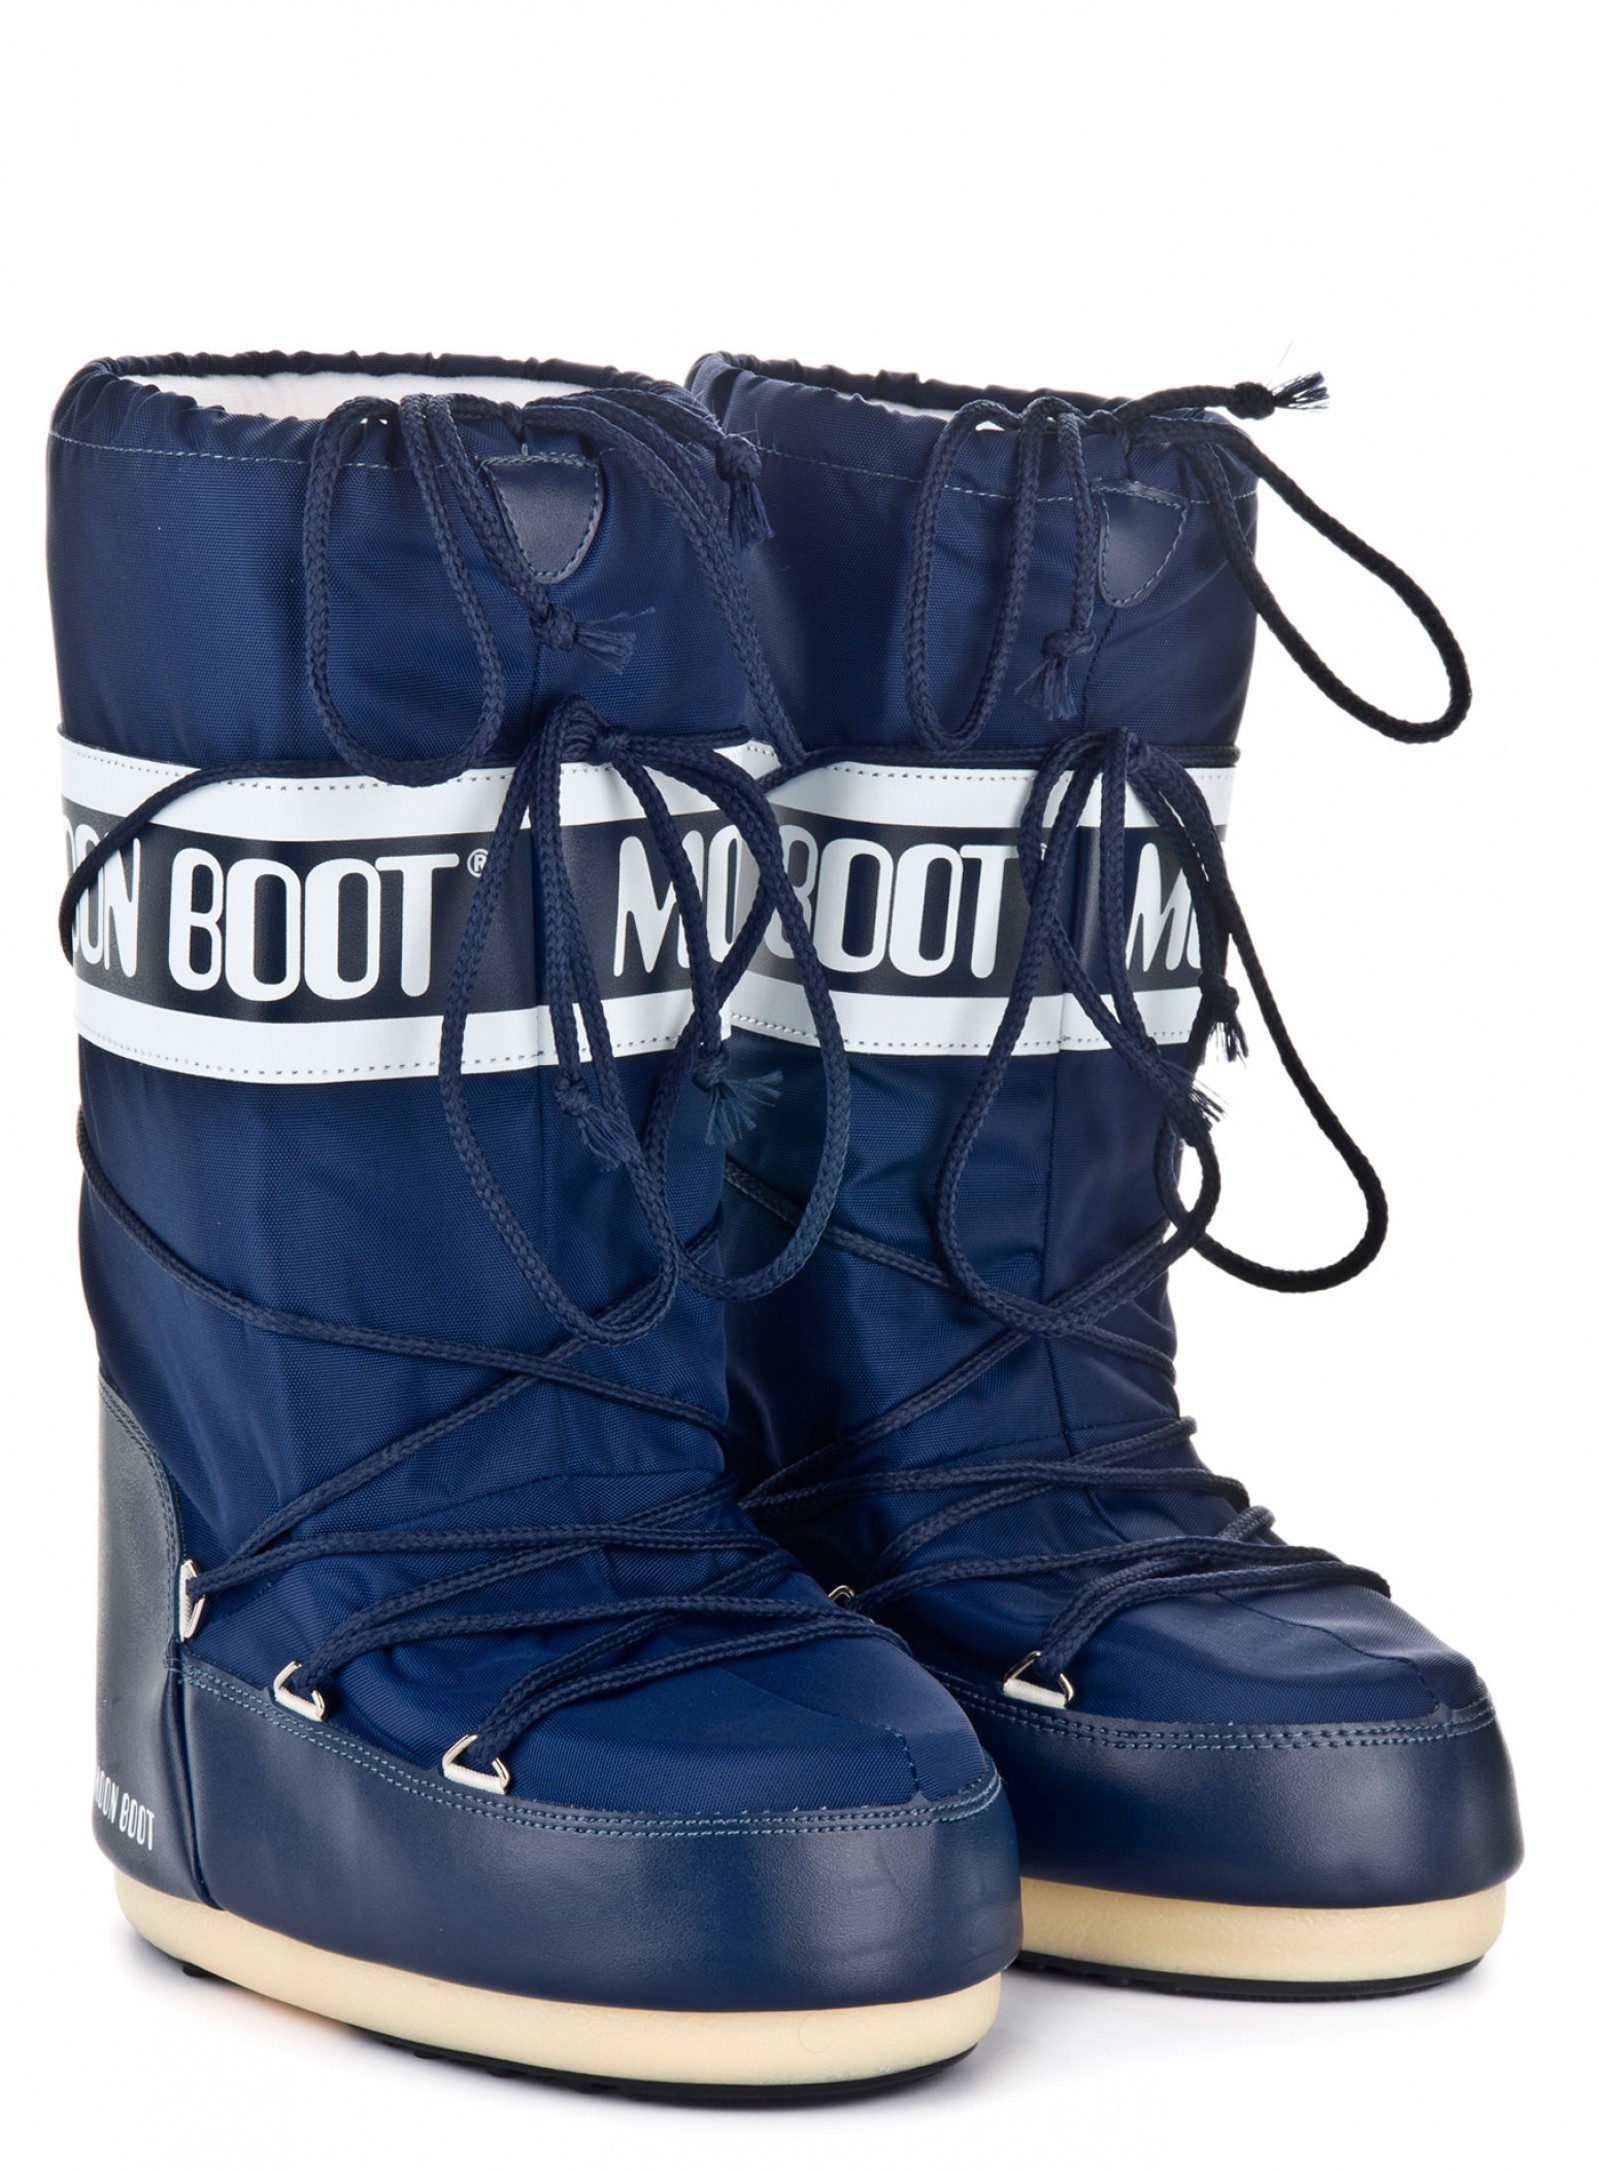 Мунбуты Tecnica Moon Boot Nylon blue